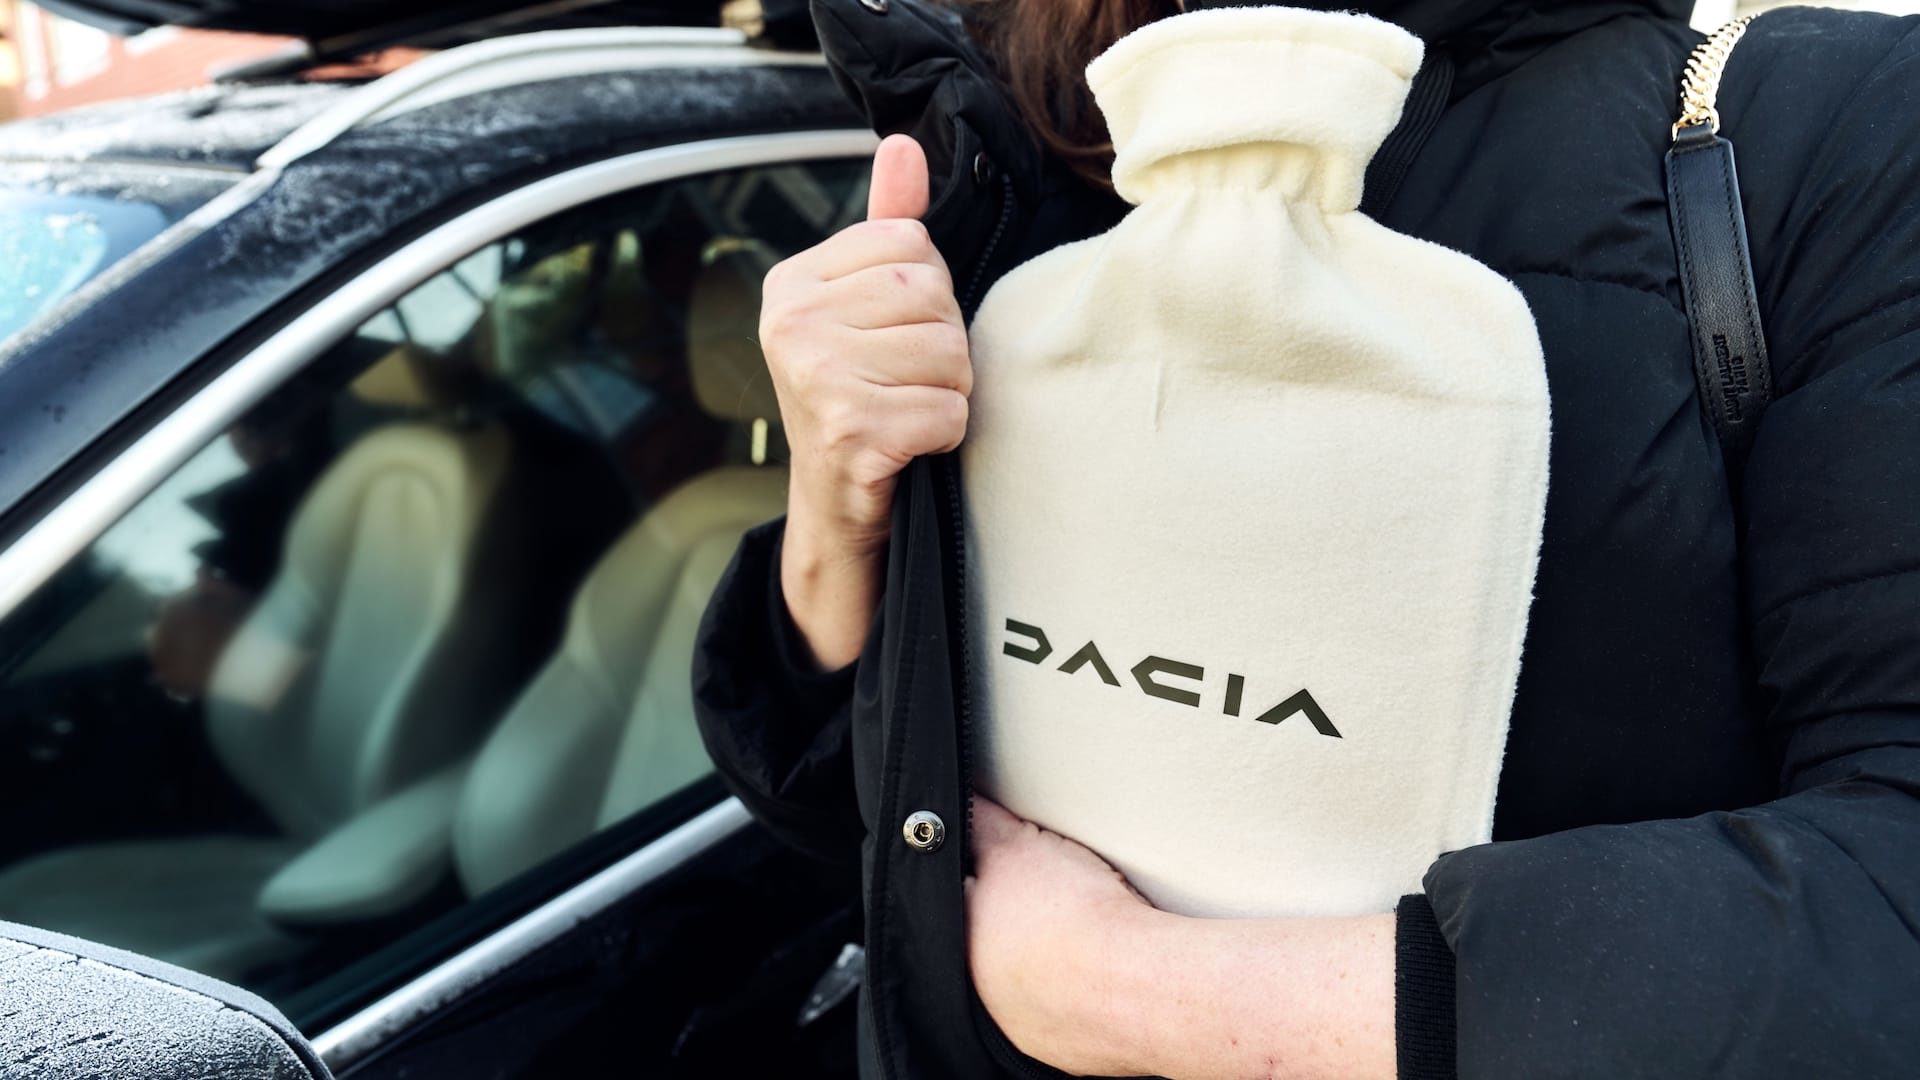 Dacia heated seats saver